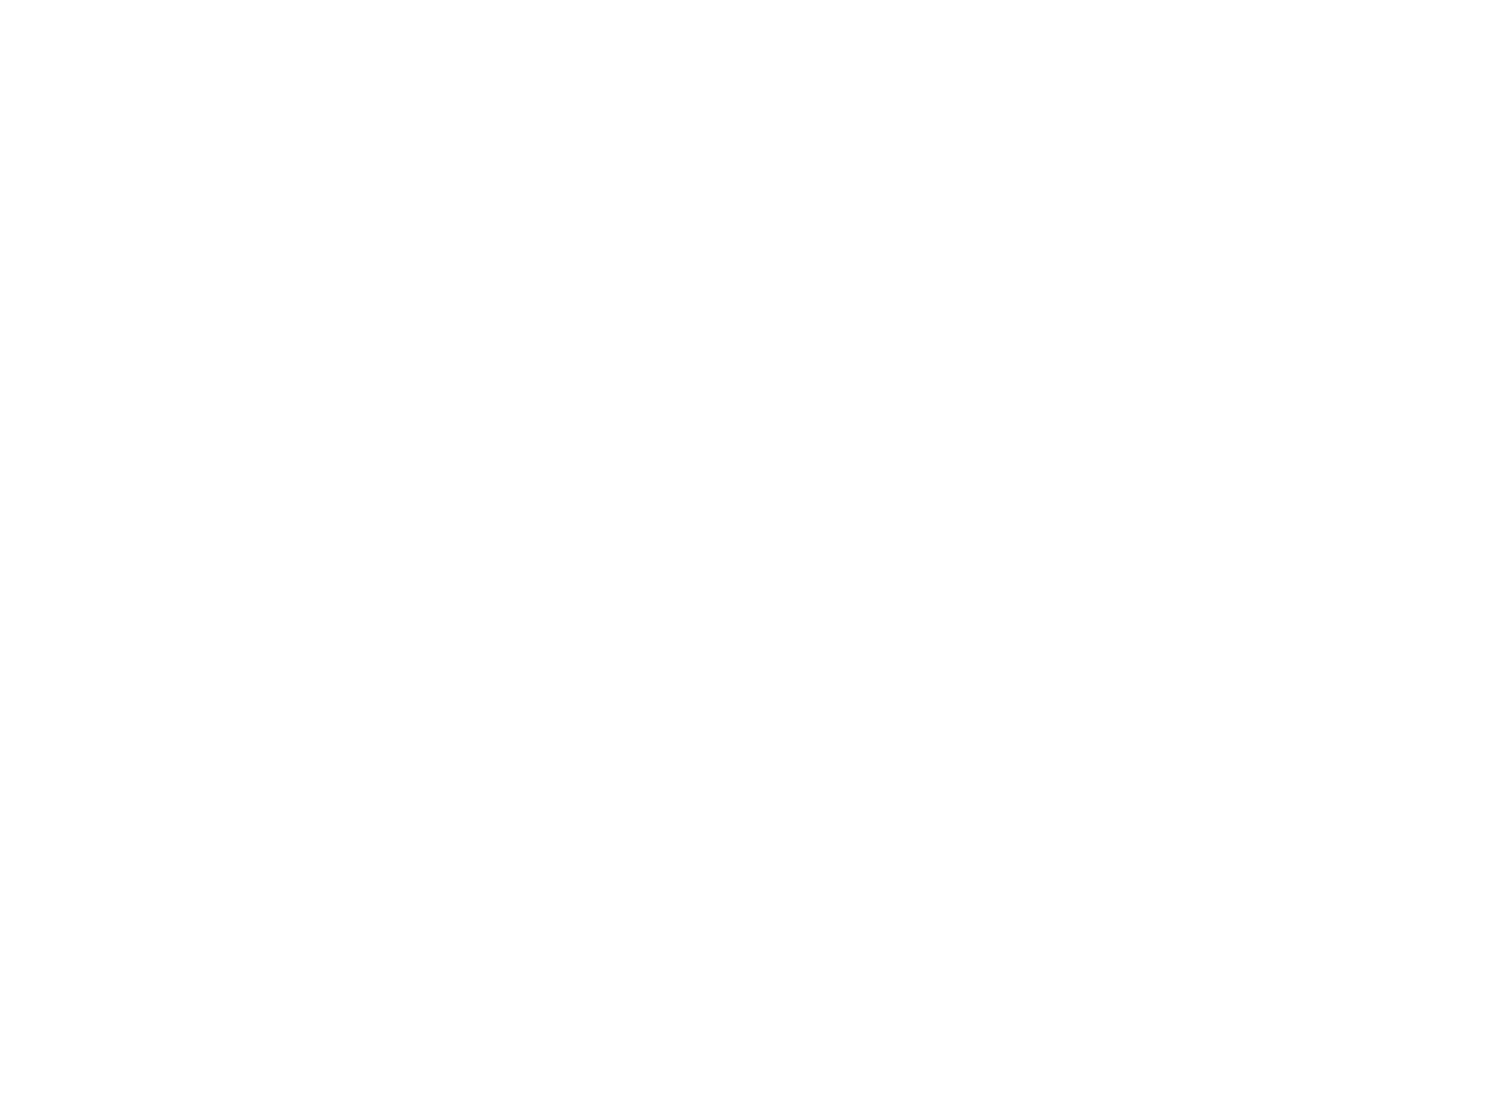 Heifer Foundation